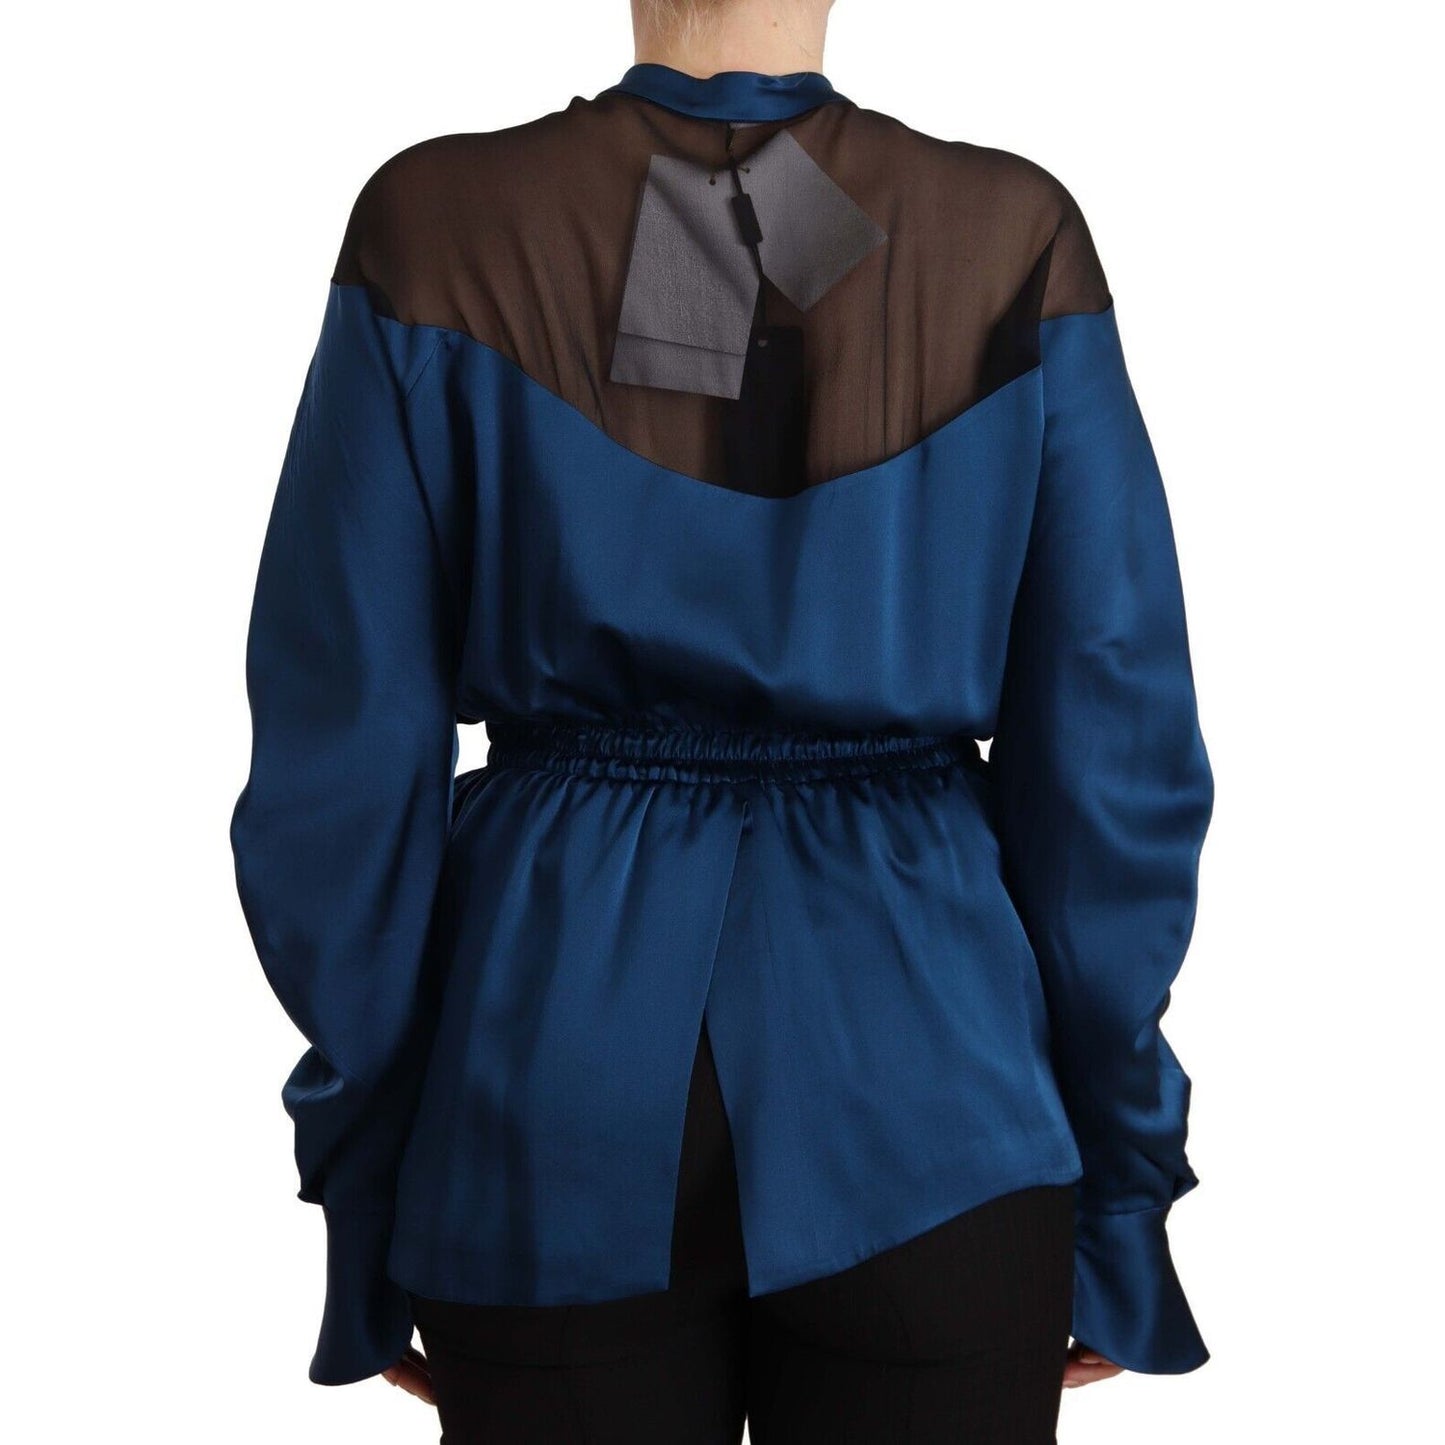 Masha Ma Elegant Crew Neck Silk Blouse in Blue blue-silk-long-sleeves-elastic-waist-top-blouse WOMAN TOPS AND SHIRTS s-l1600-2-28-40c13803-ae7.jpg